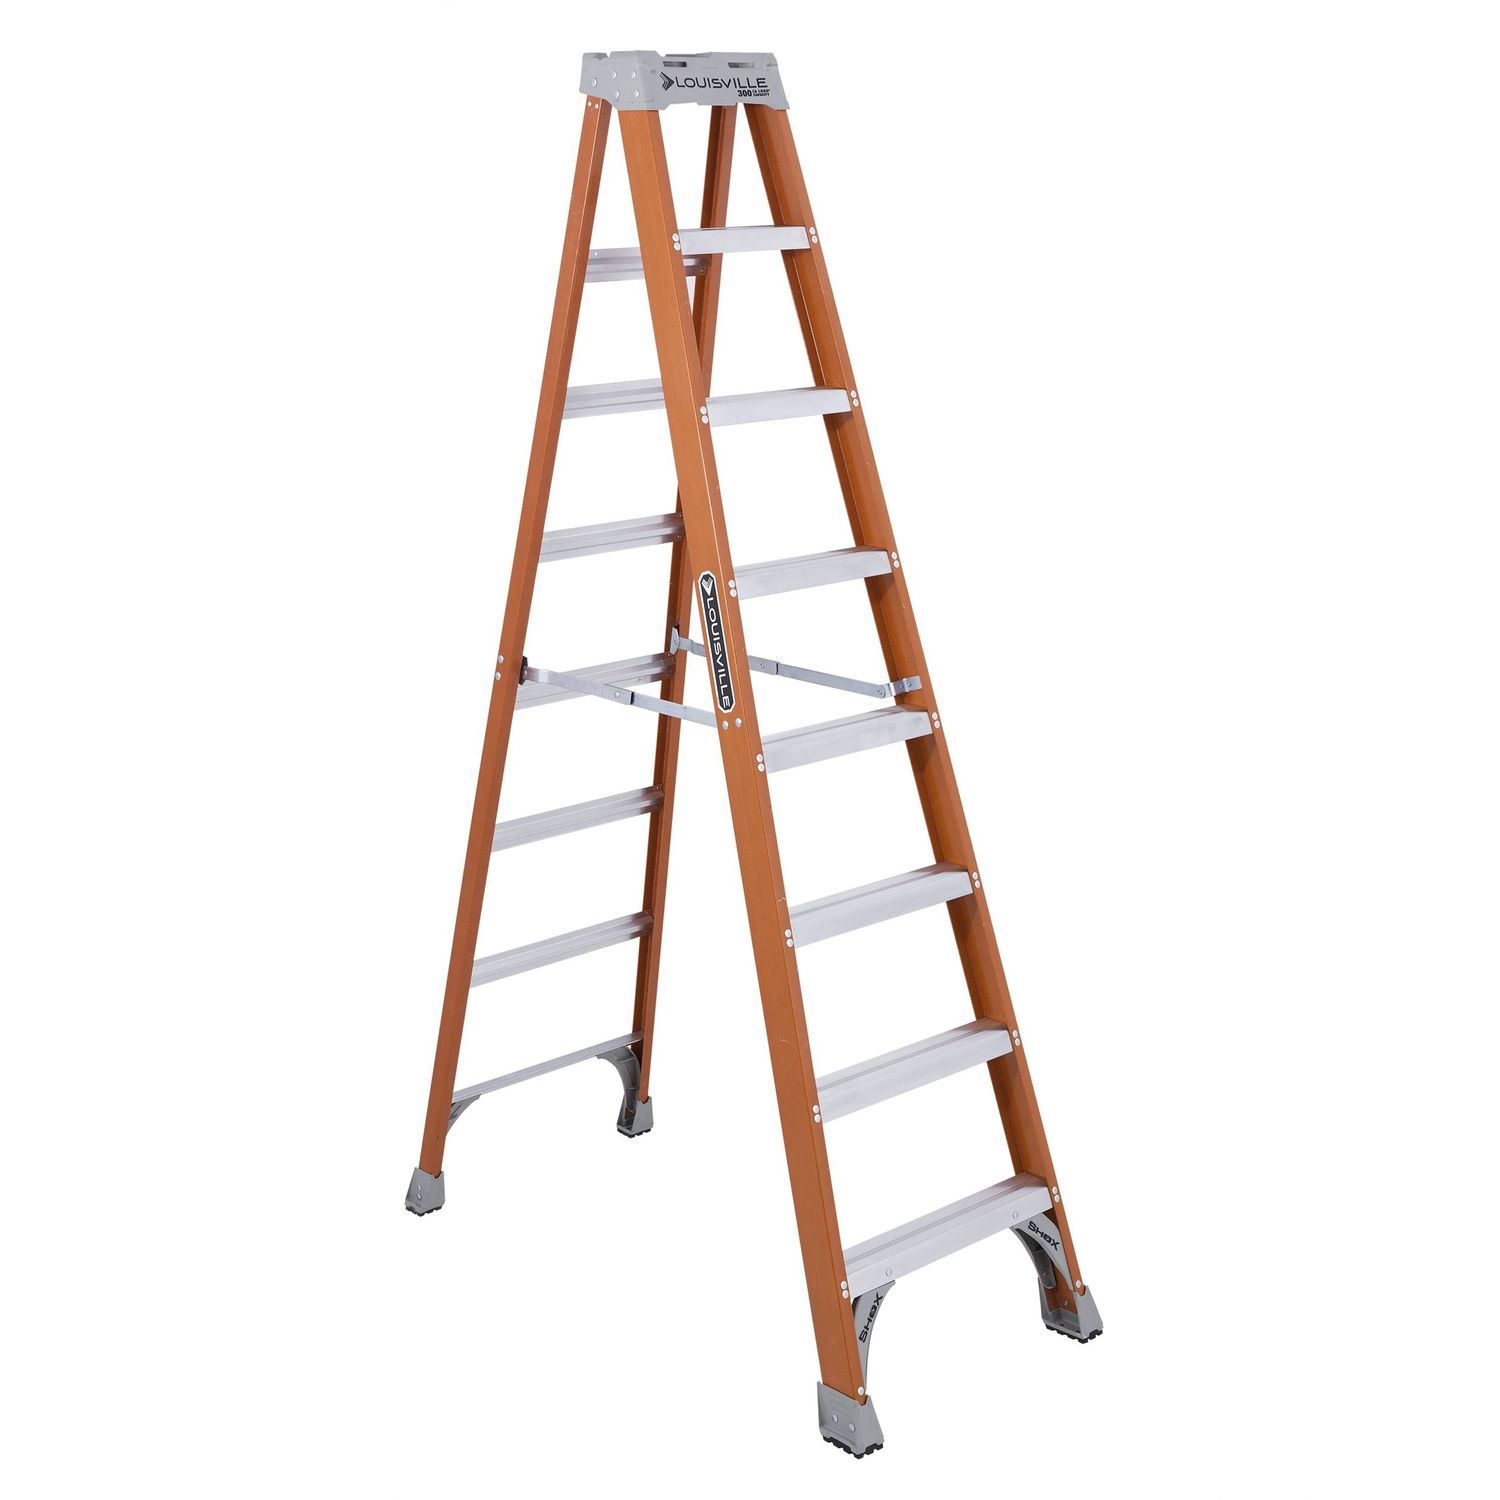 8' Fiberglass Step Ladder 7 Step, 300 lb Load Capacity, 25.8" x 5.8" x 96", Orange